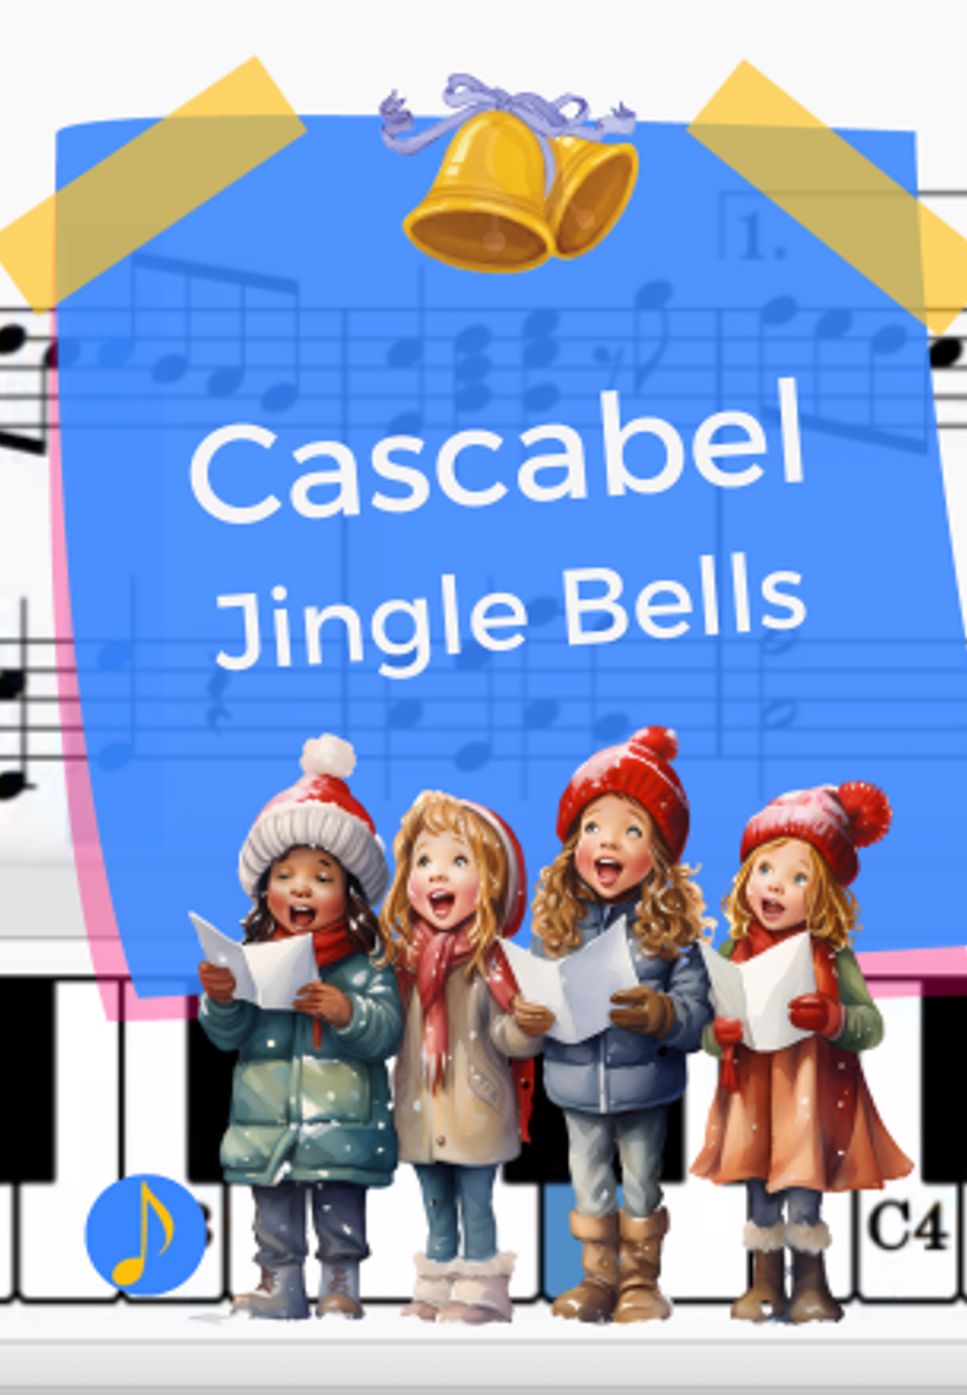 Cascabel (Jingle Bells) by Rosalinda Colella